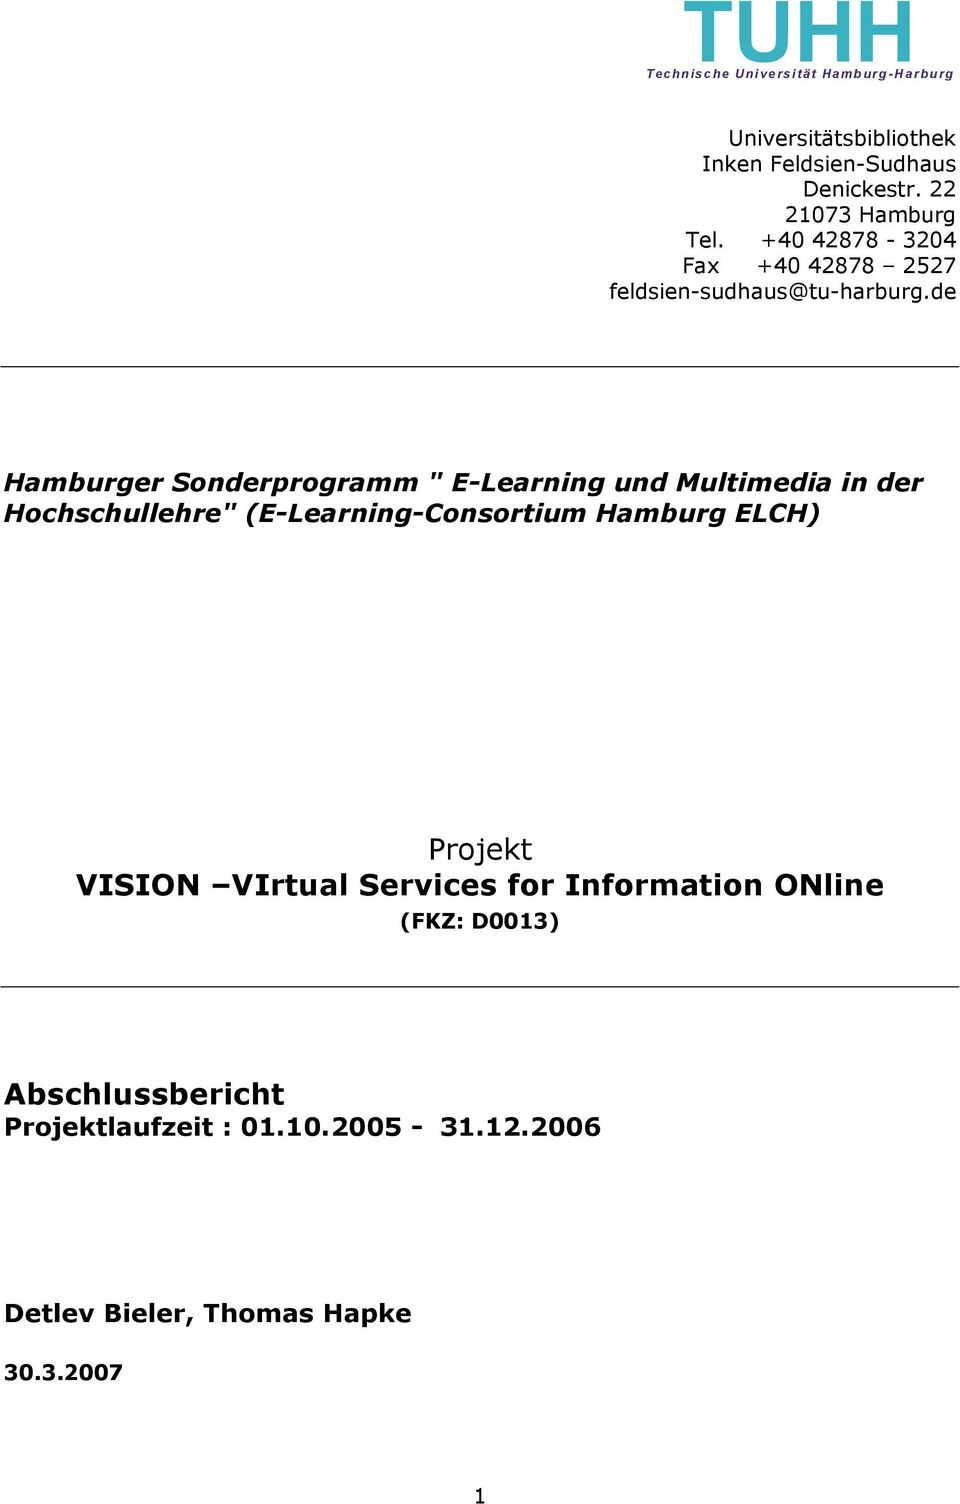 de Hamburger Sonderprogramm " E-Learning und Multimedia in der Hochschullehre" (E-Learning-Consortium Hamburg ELCH)